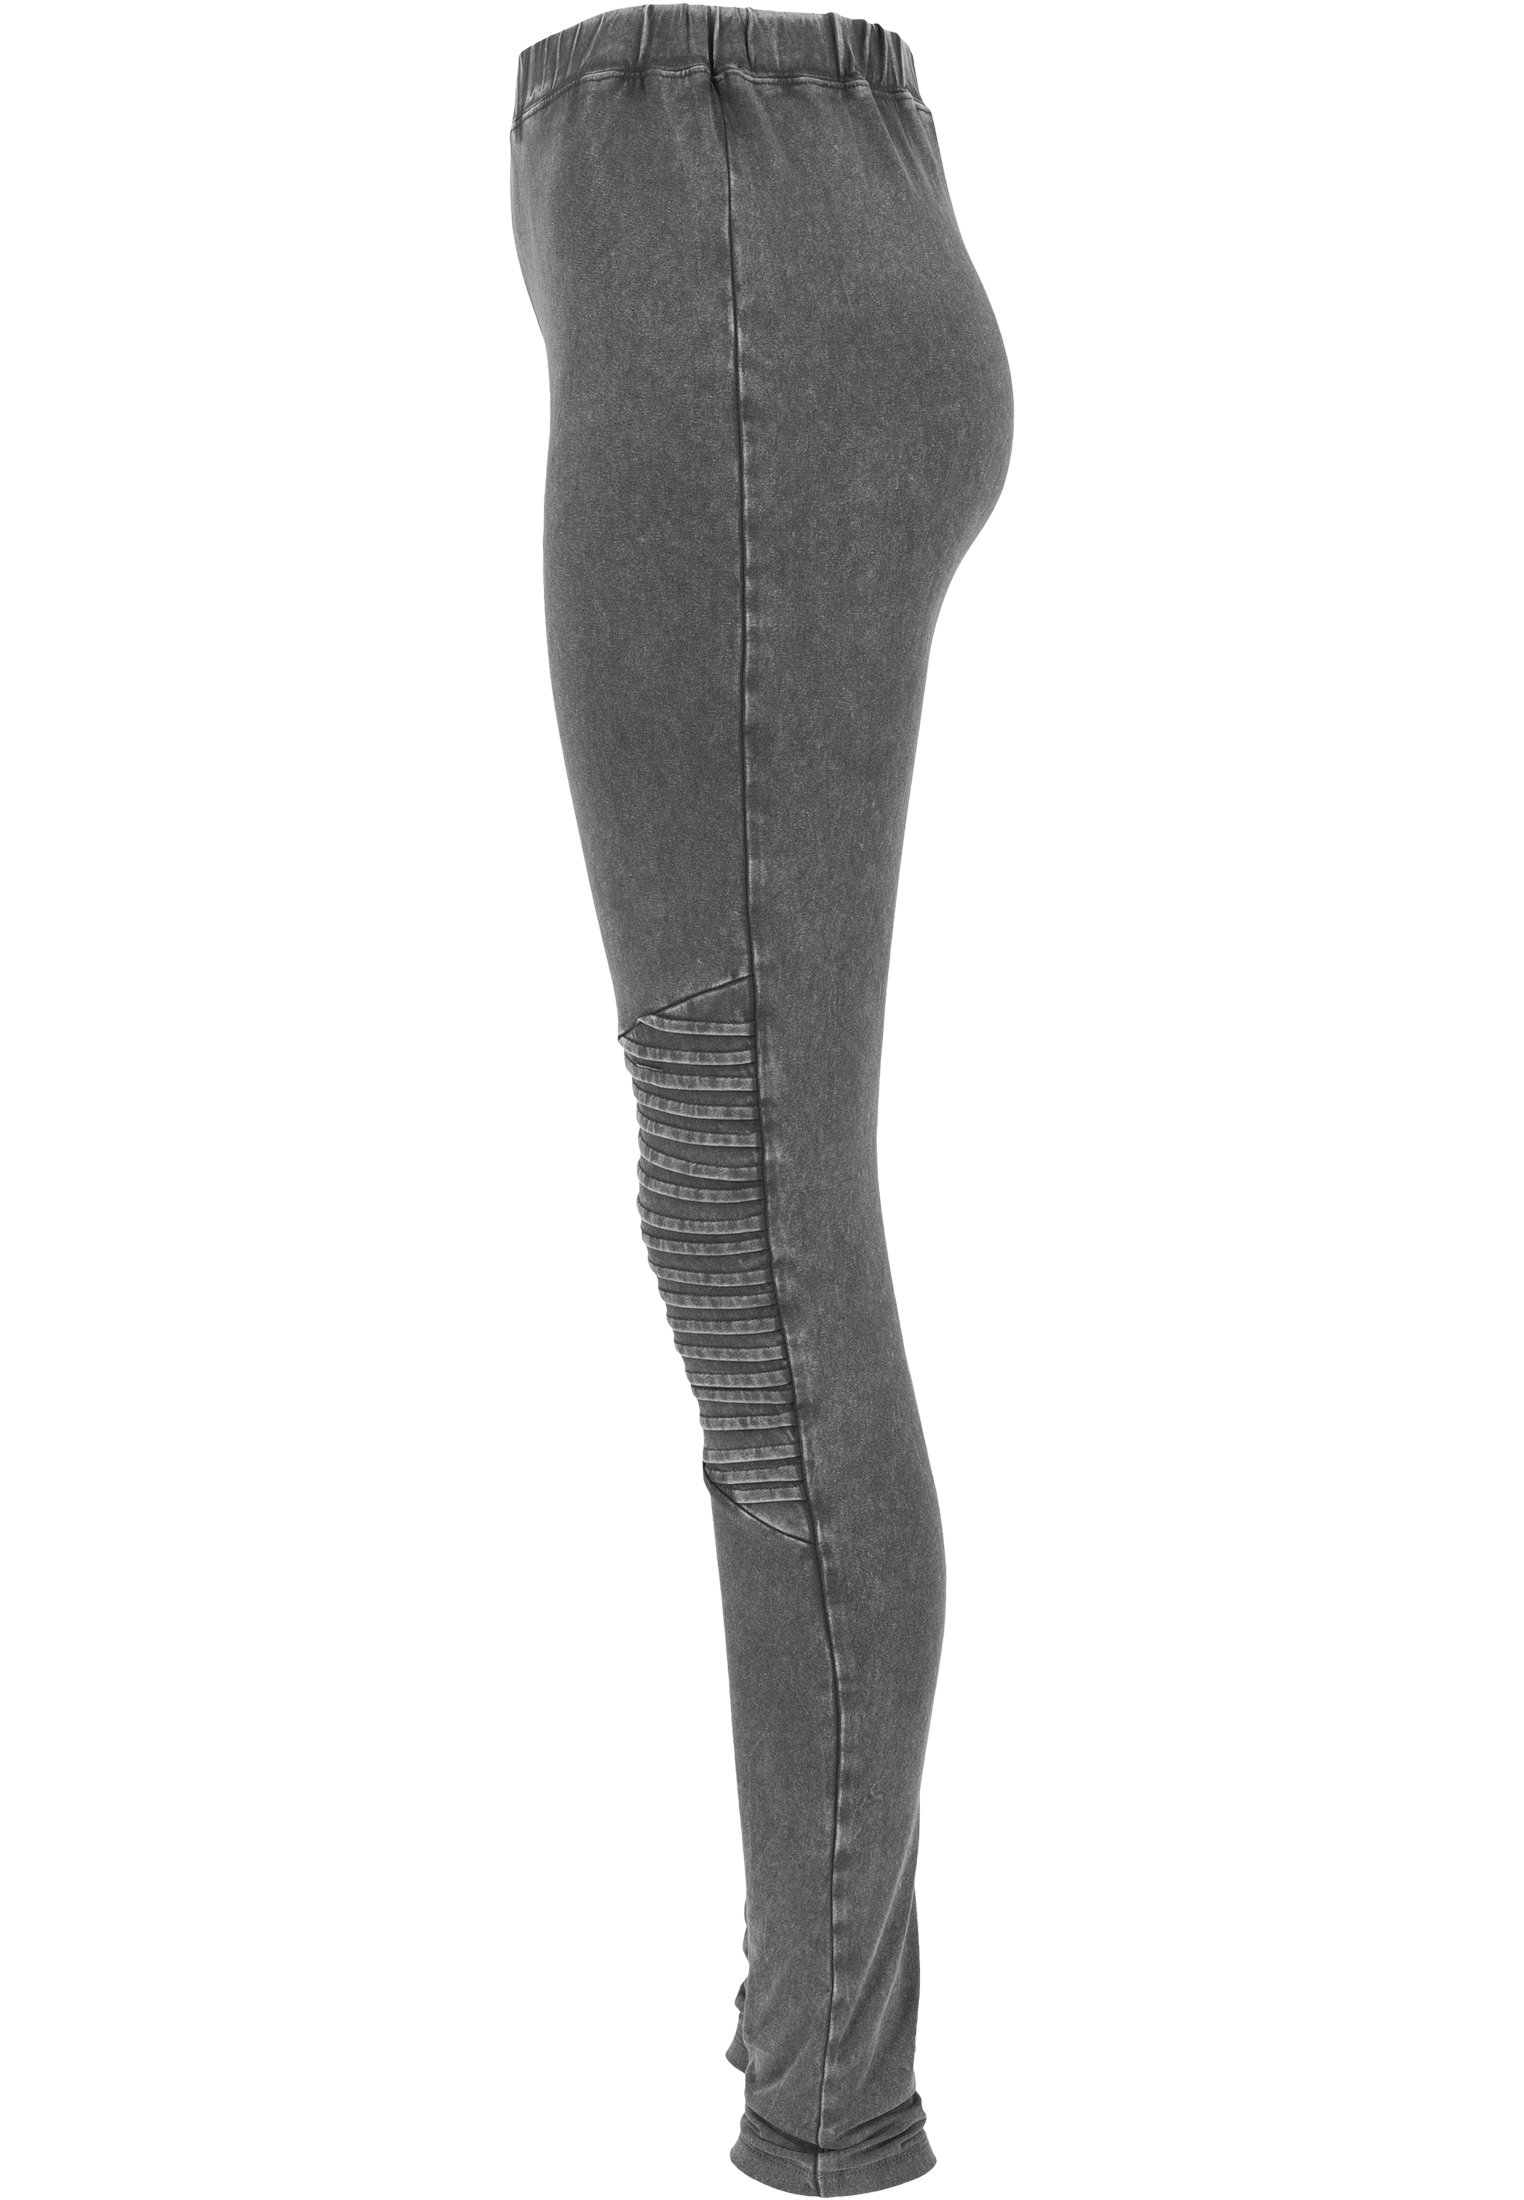 Curvy Ladies Denim Jersey Leggings in Farbe darkgrey